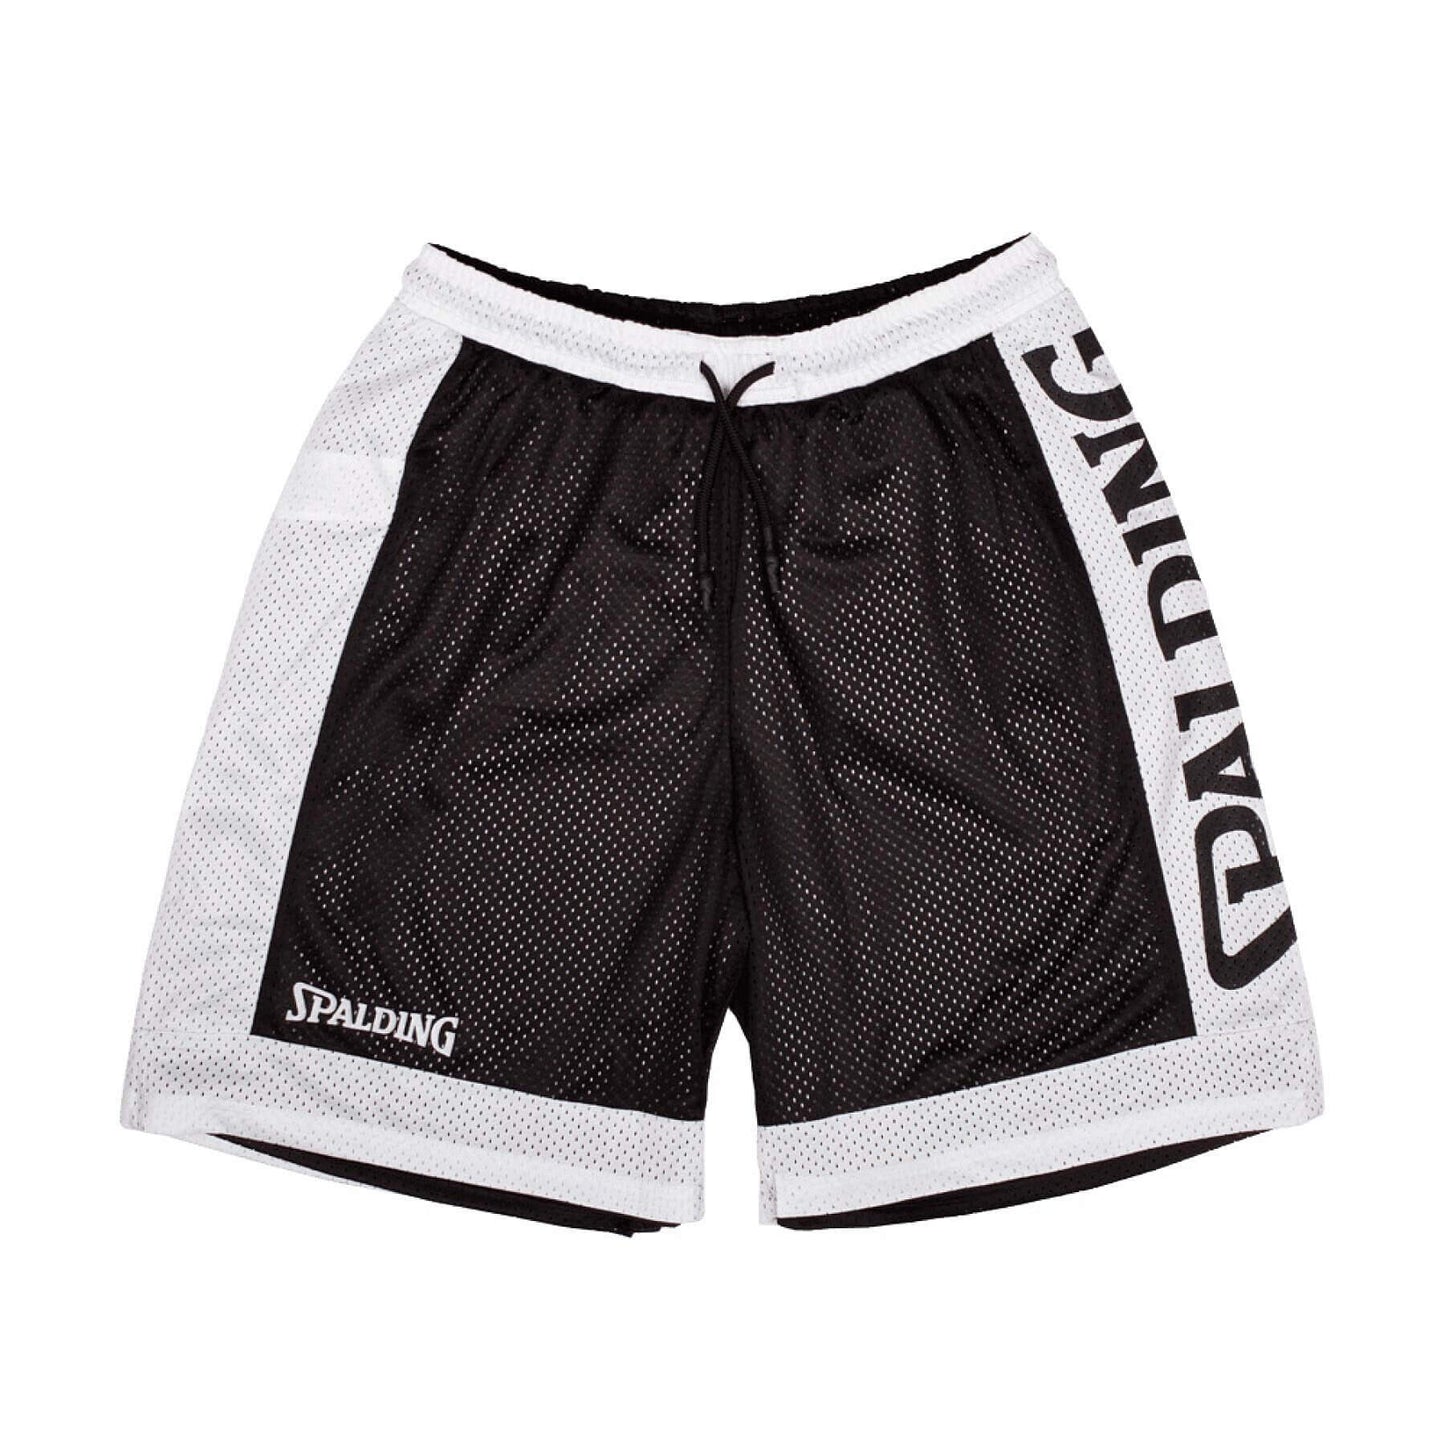 Spalding Reversible Shorts Black/White